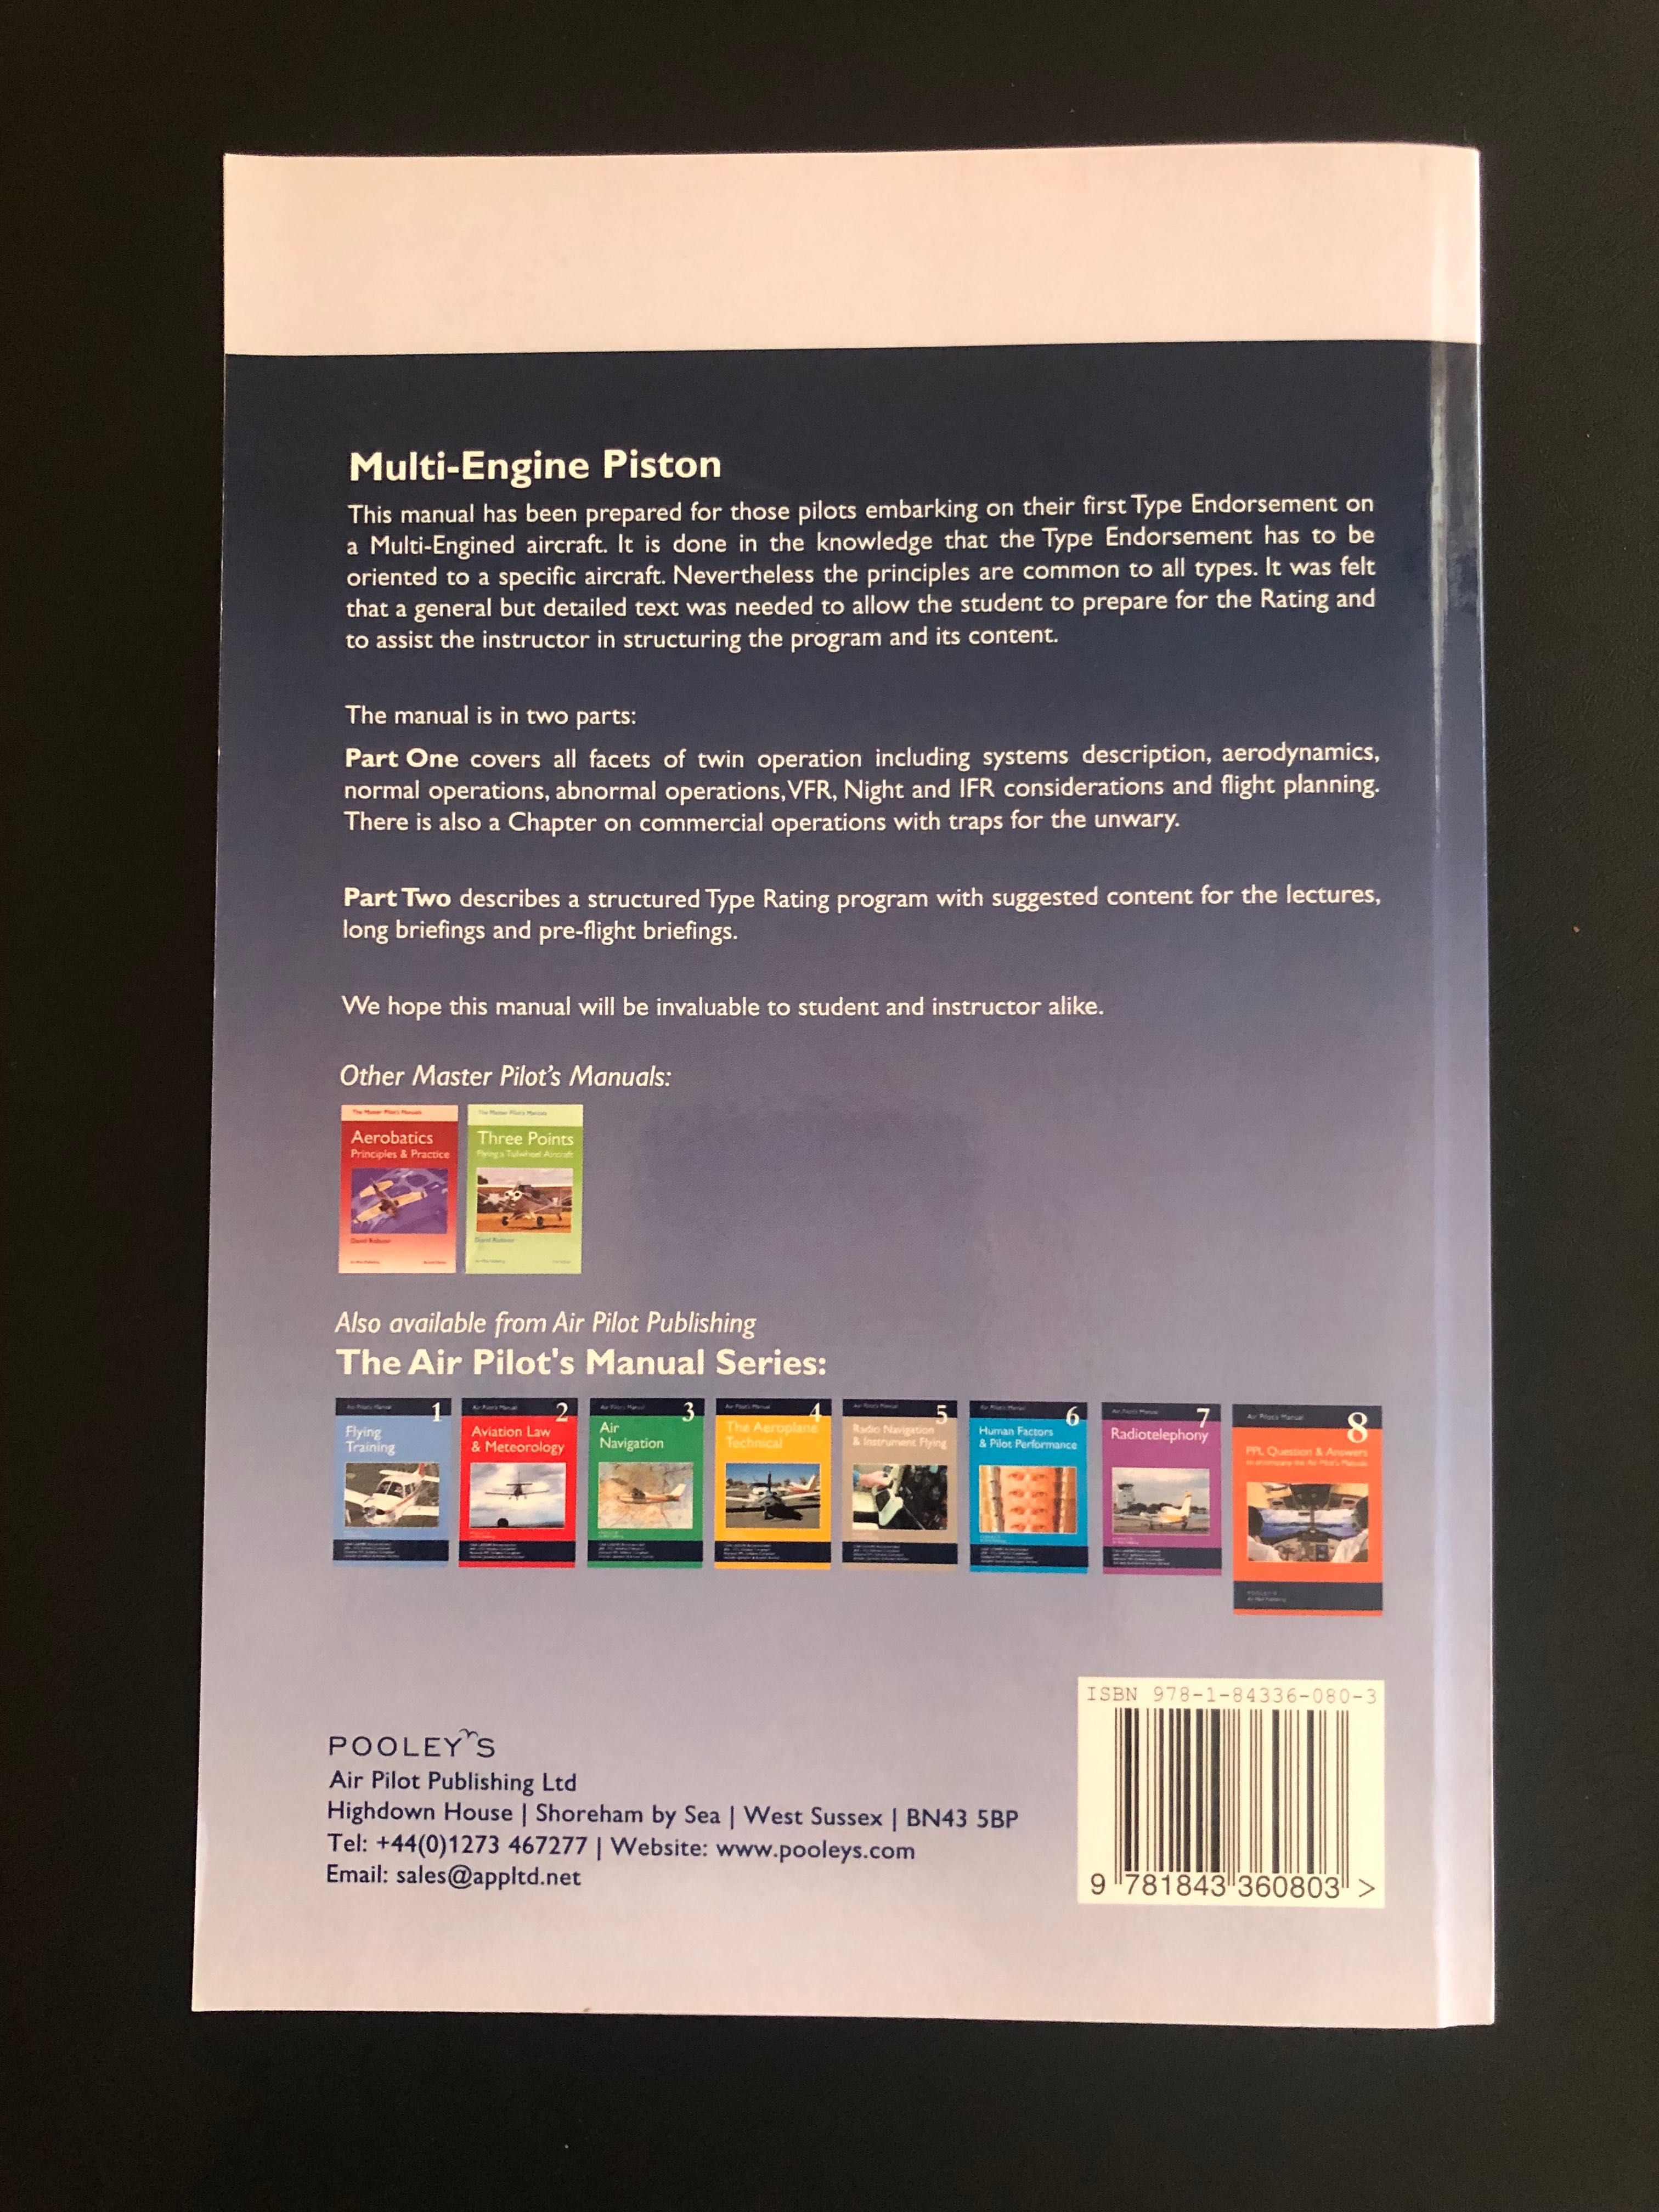 Multi-Engine Piston, The Master Pilot's Manuals, livro como novo;